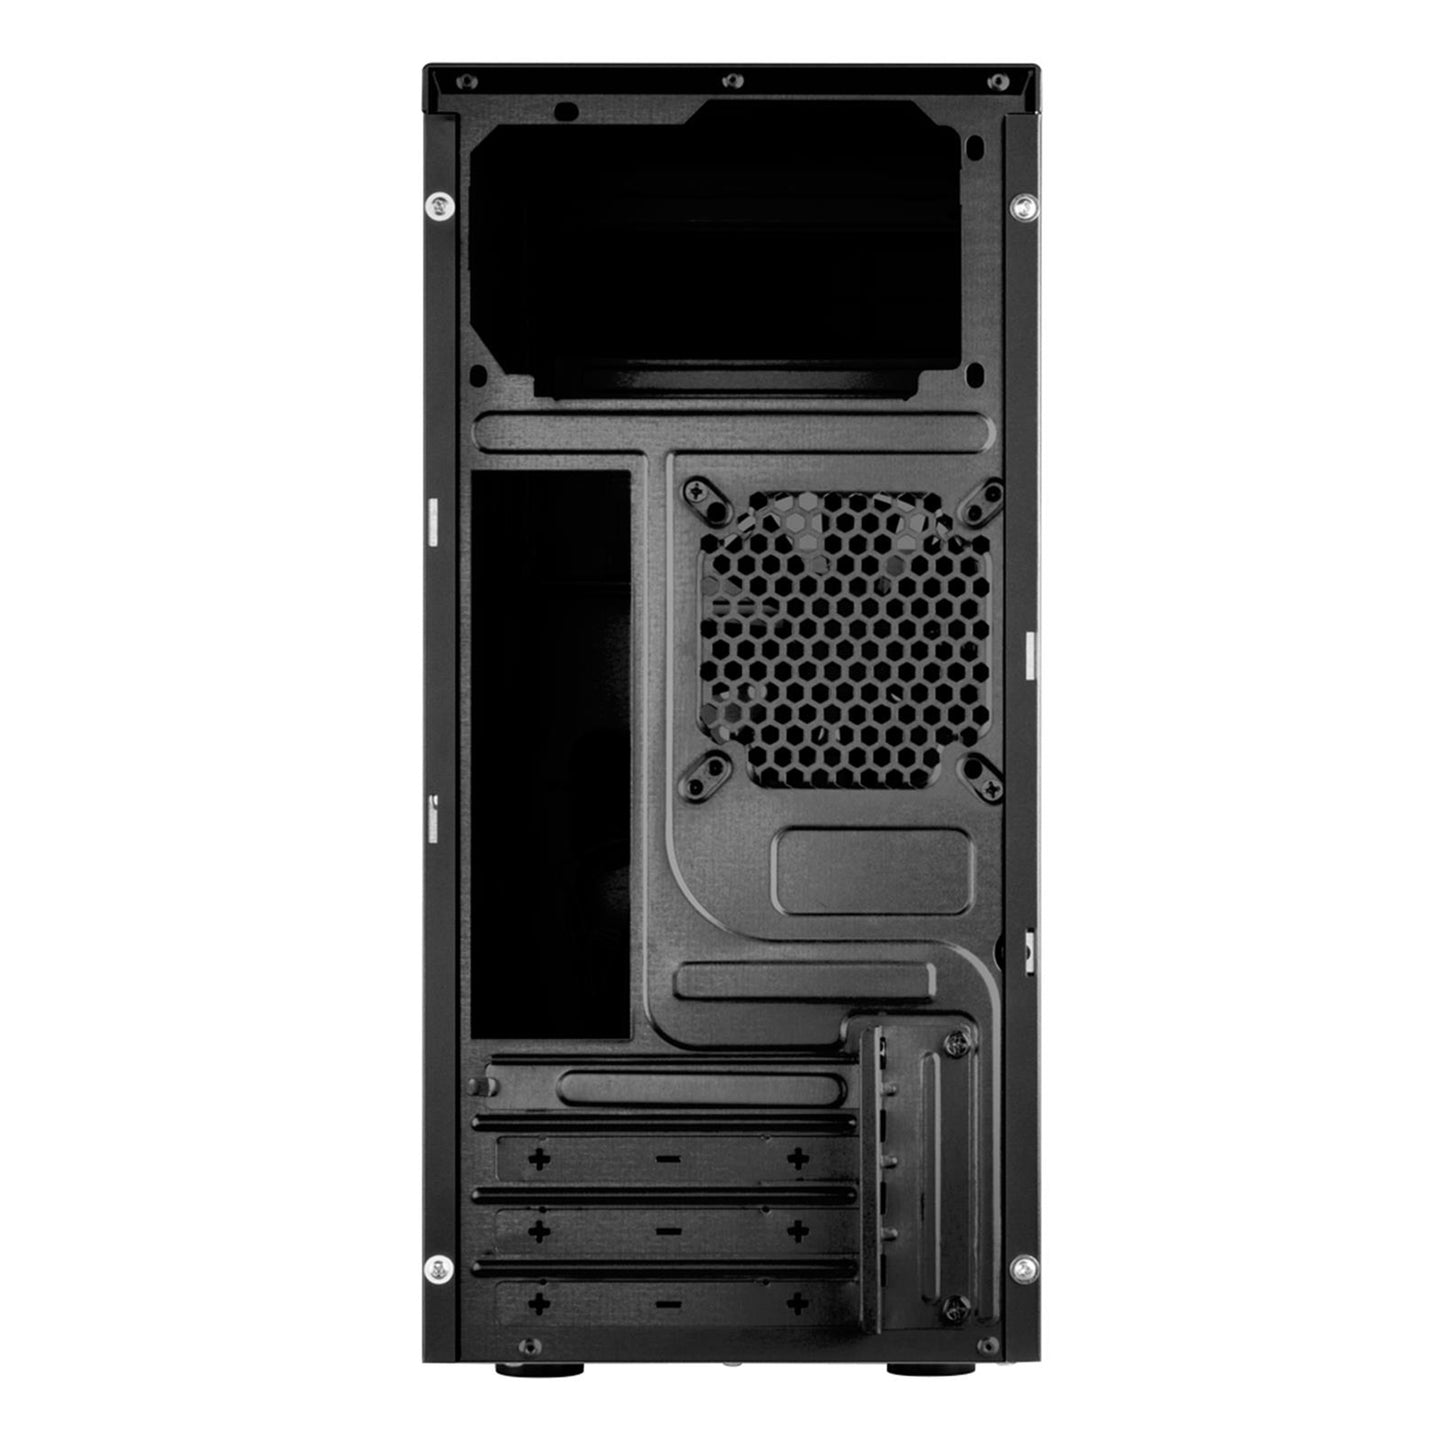 Antec VSK3000B U3/U2 Micro ATX Mid Tower PC Case, USB 3.0, Black with Black Interior